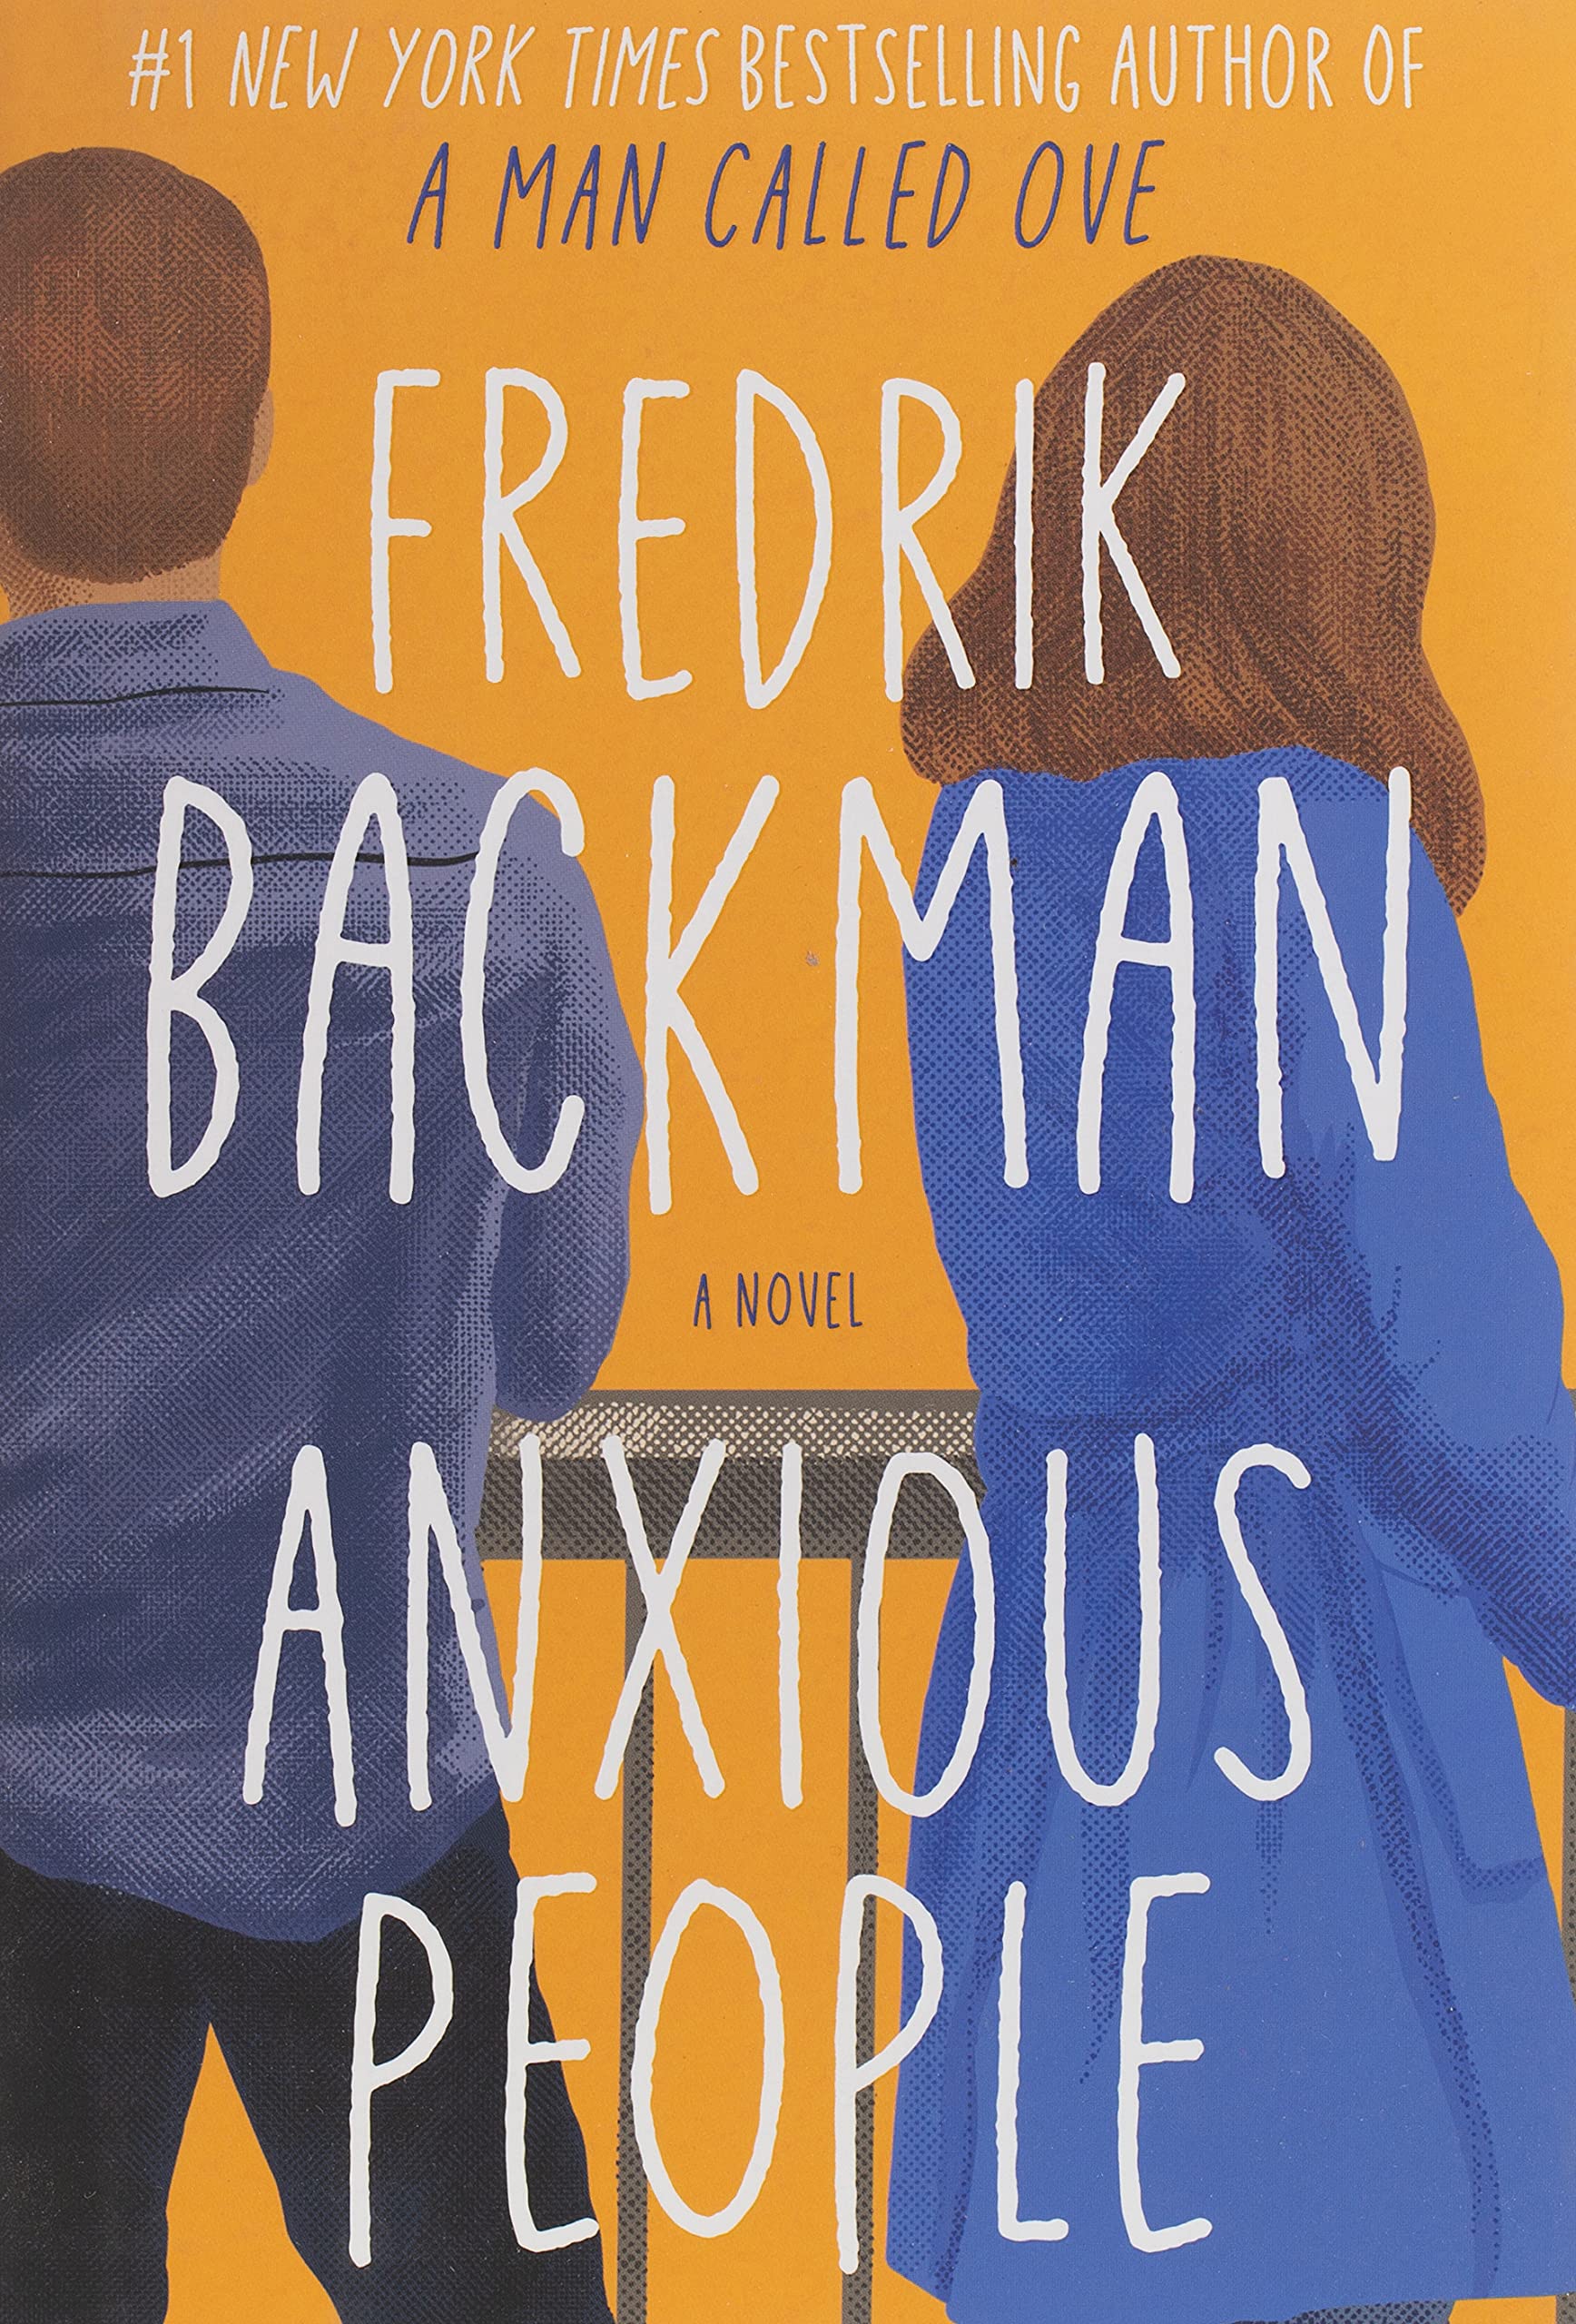 Fredrik Backman: Anxious People (2020, Atria Books)